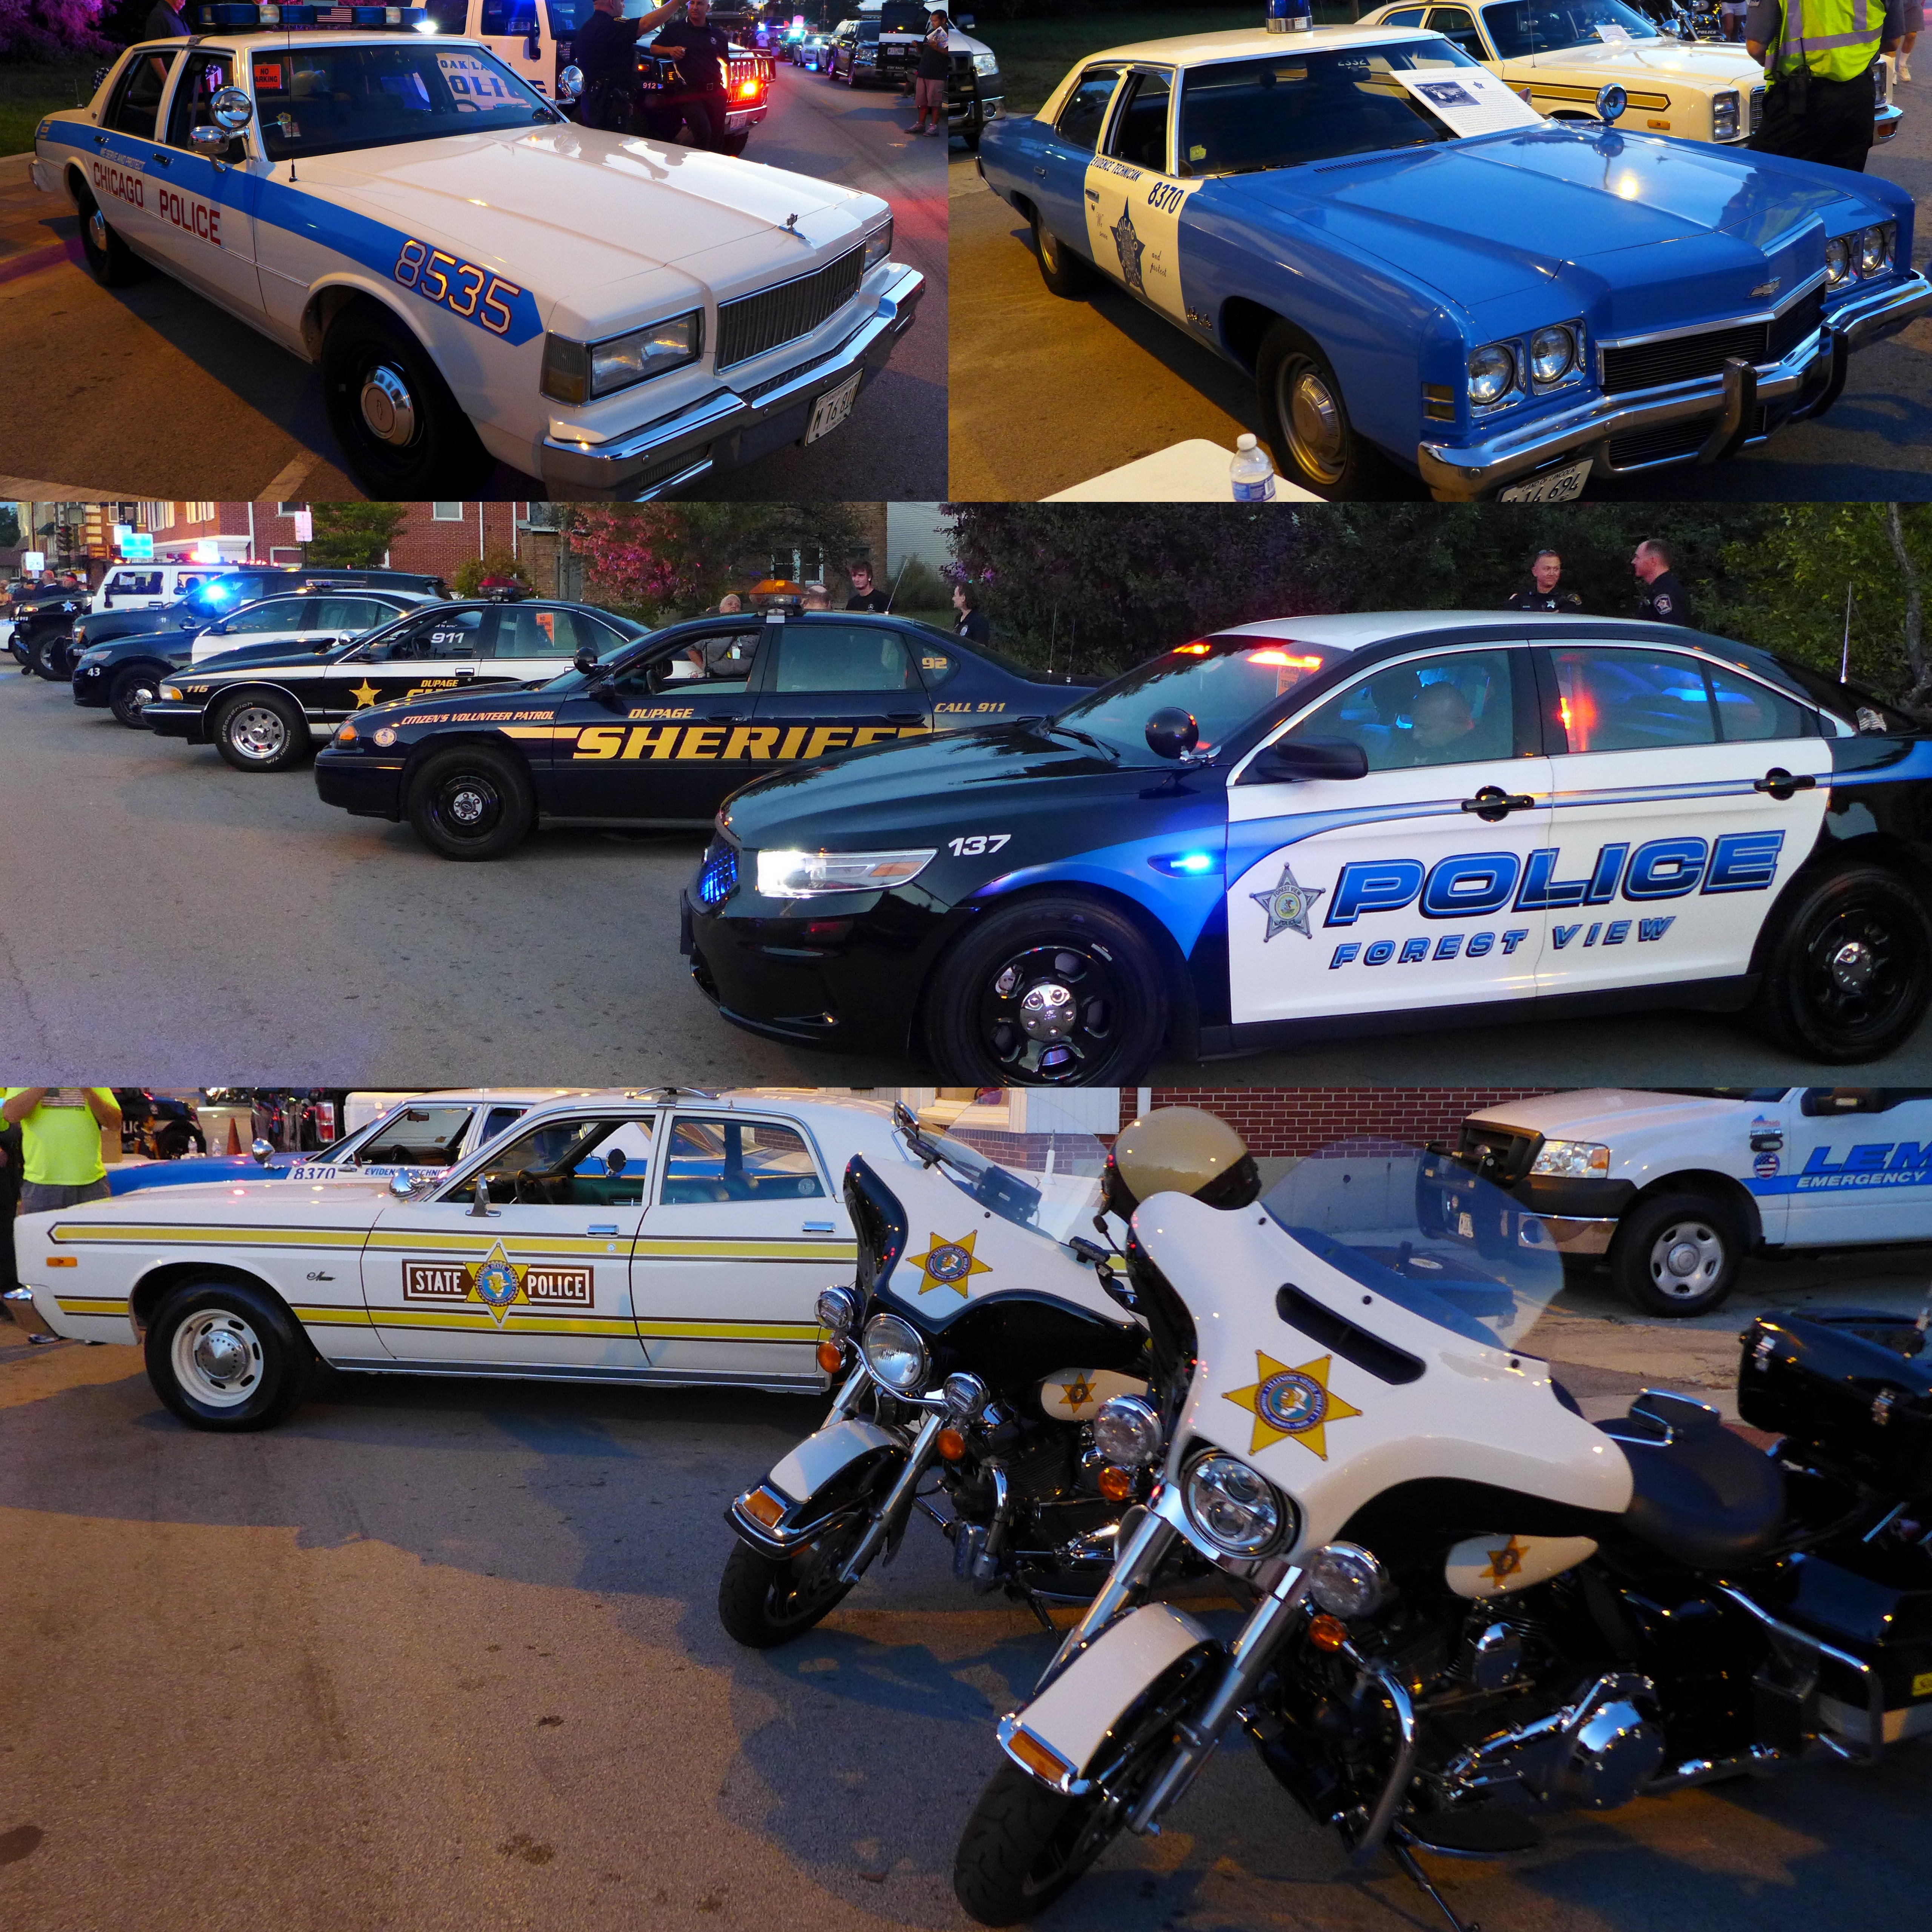 Policecars